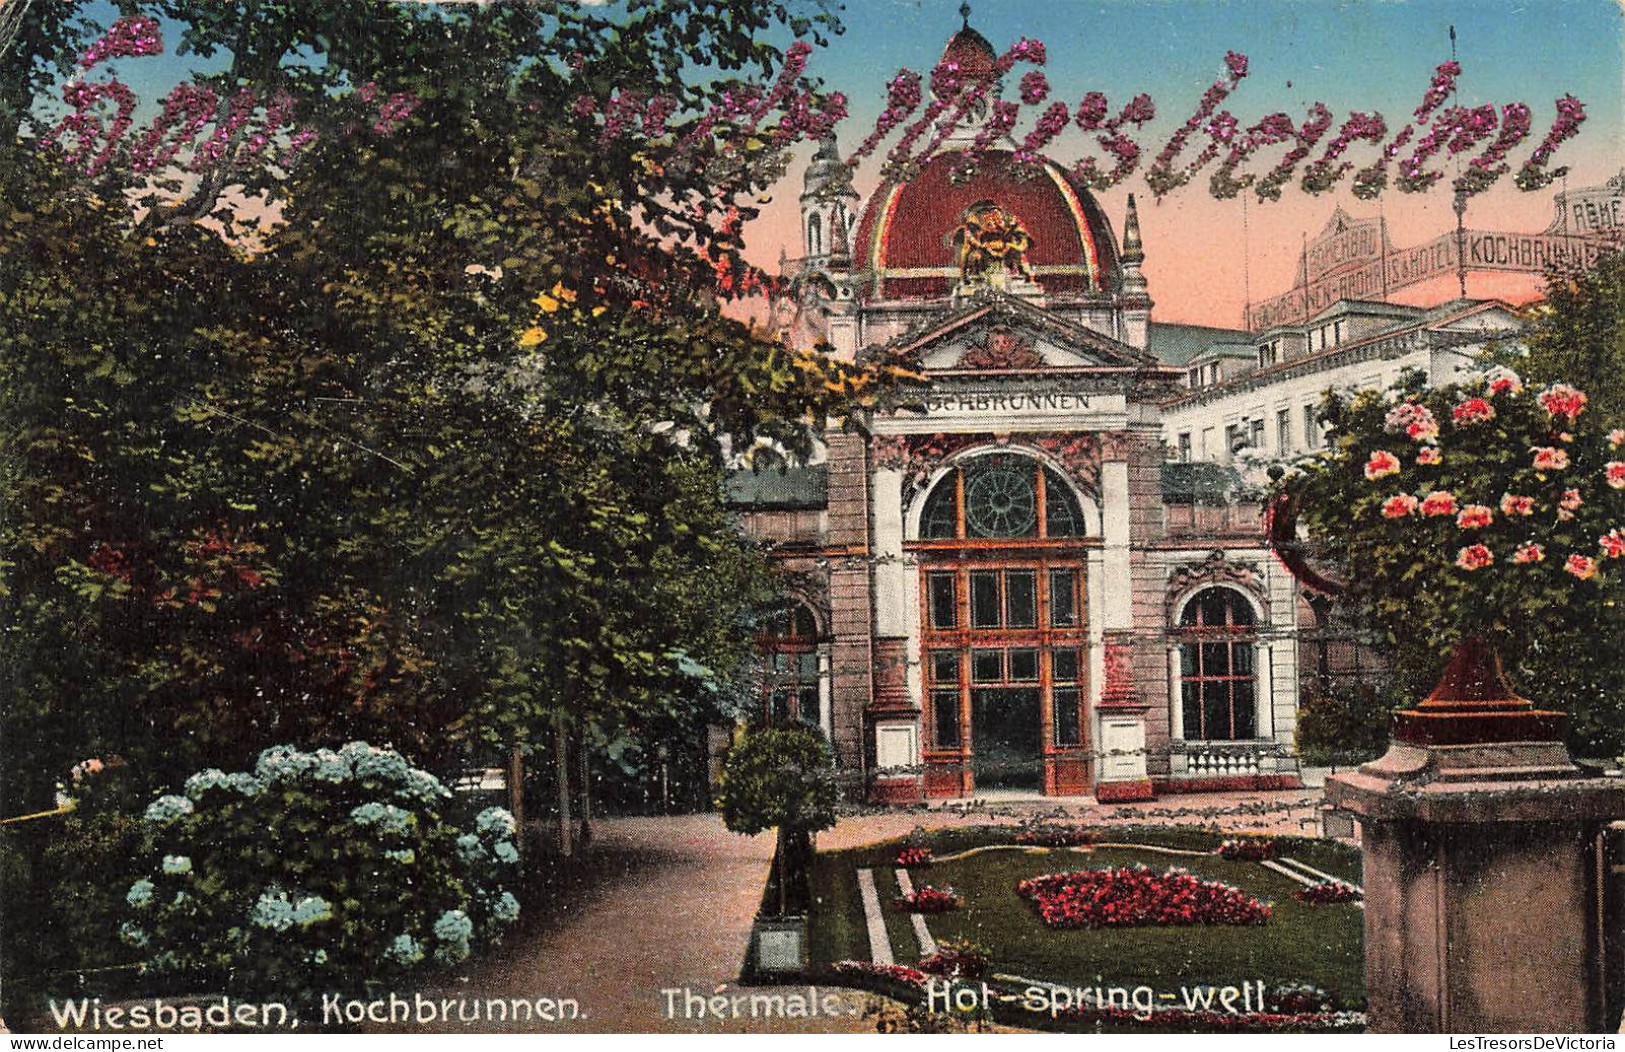 ALLEMAGNE - Wiesbaden - Kochbrunnen - Thermale - Hot Spring Well - Colorisé - Carte Postale Ancienne - Wiesbaden